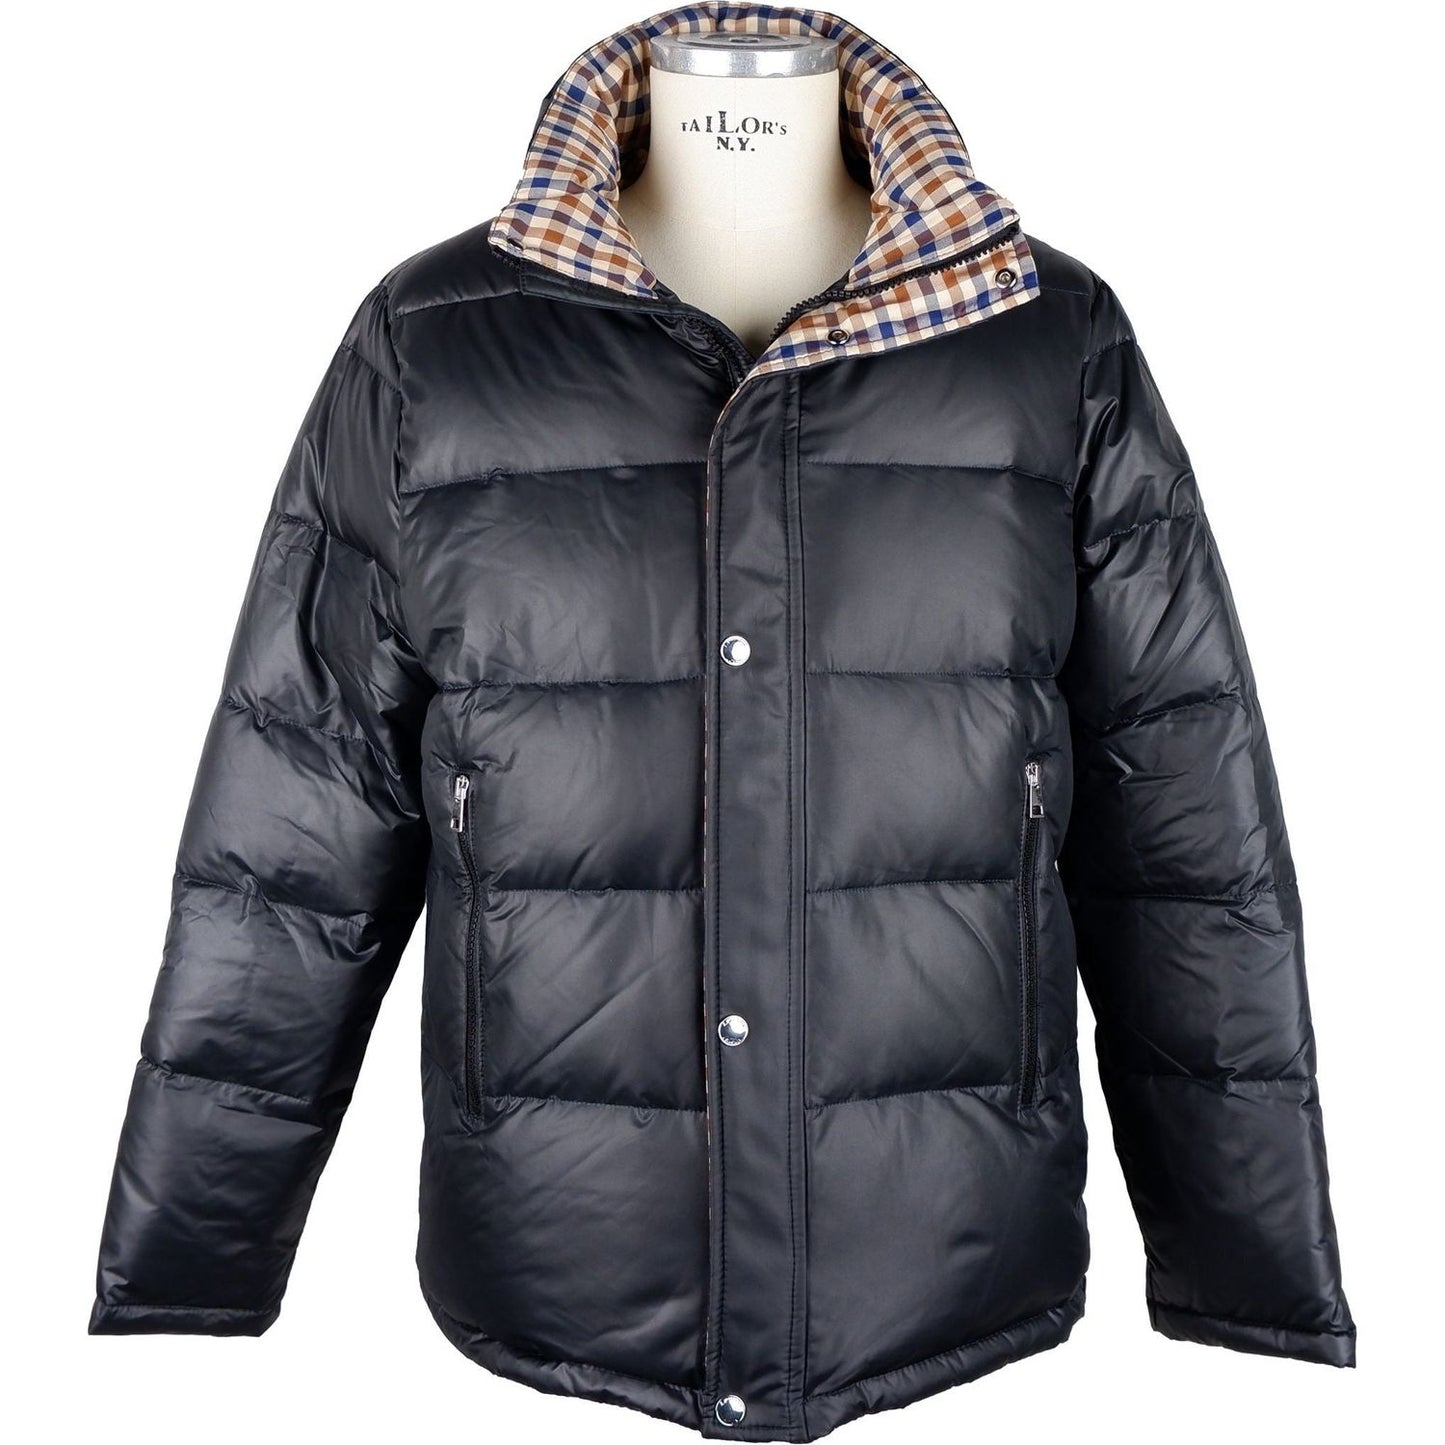 Aquascutum Elegant Black Padded Jacket with Removable Hood MAN COATS & JACKETS black-polyester-jacket-3 product-7381-762139221-scaled-5224a3d8-3c7.jpg